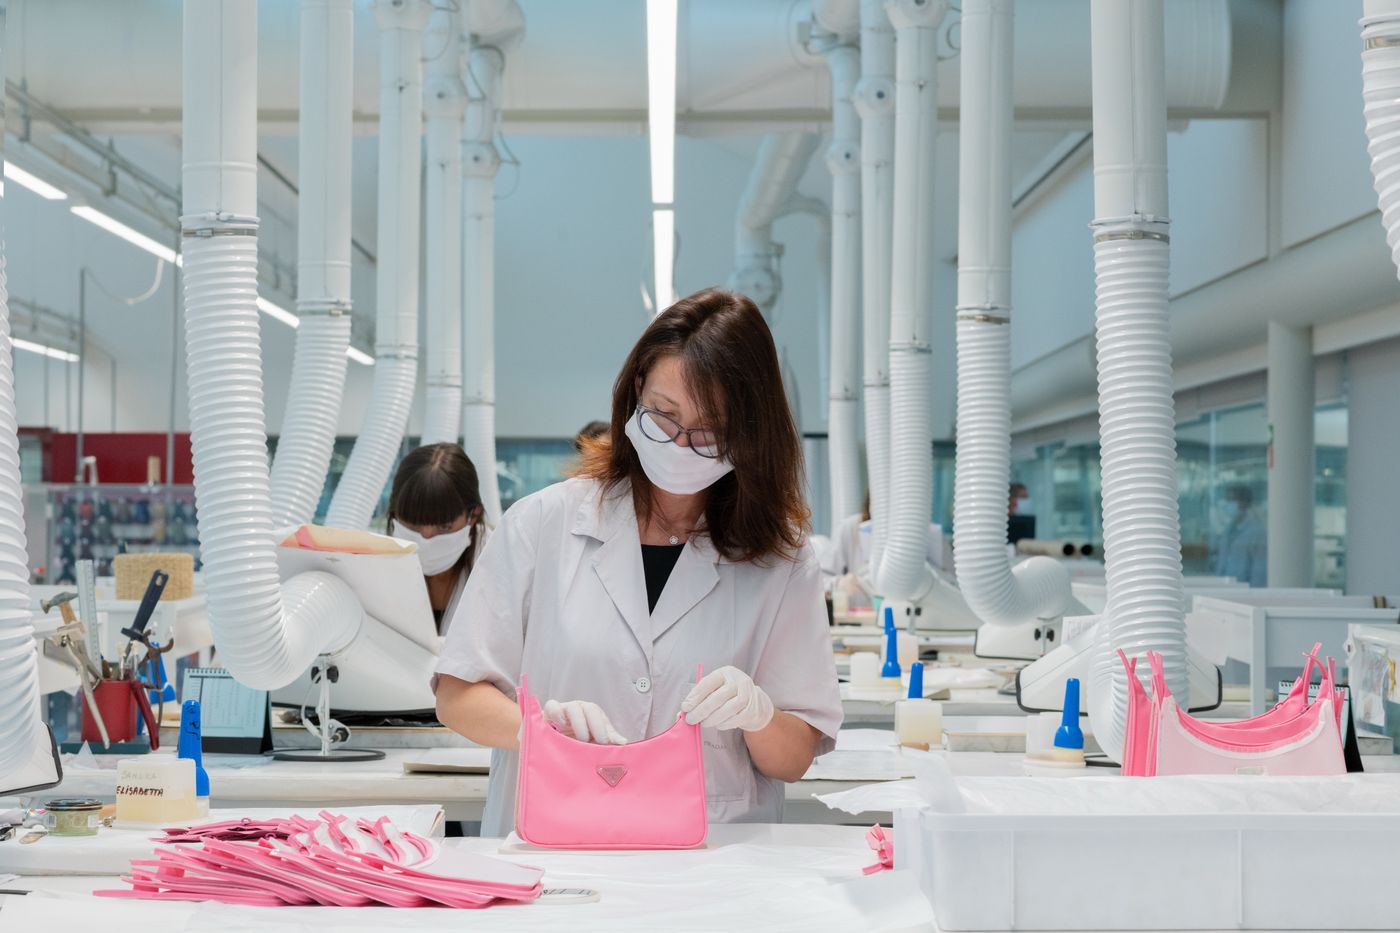 Prada Bought Coronavirus Tests for Factory Workers